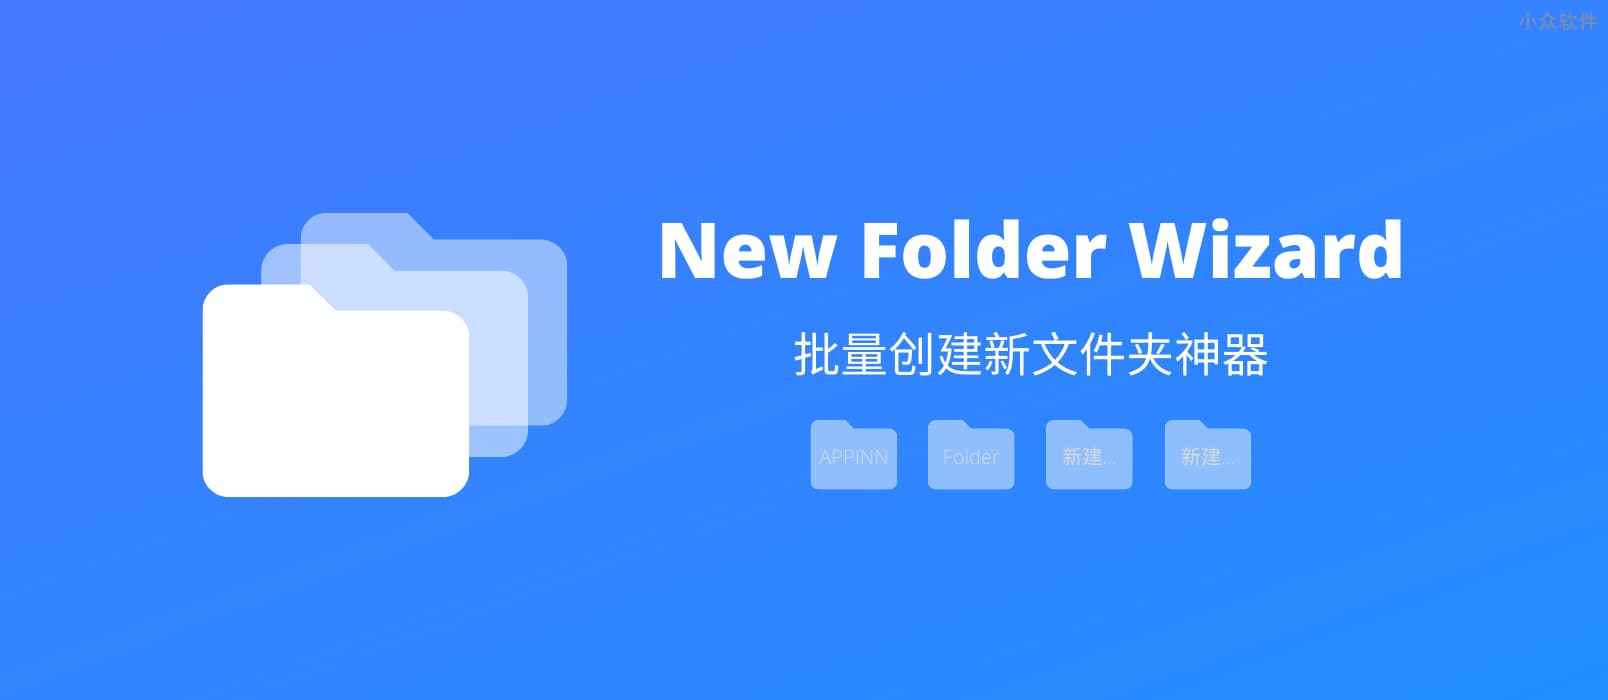 New Folder Wizard - 批量创建新文件夹神器[Windows]